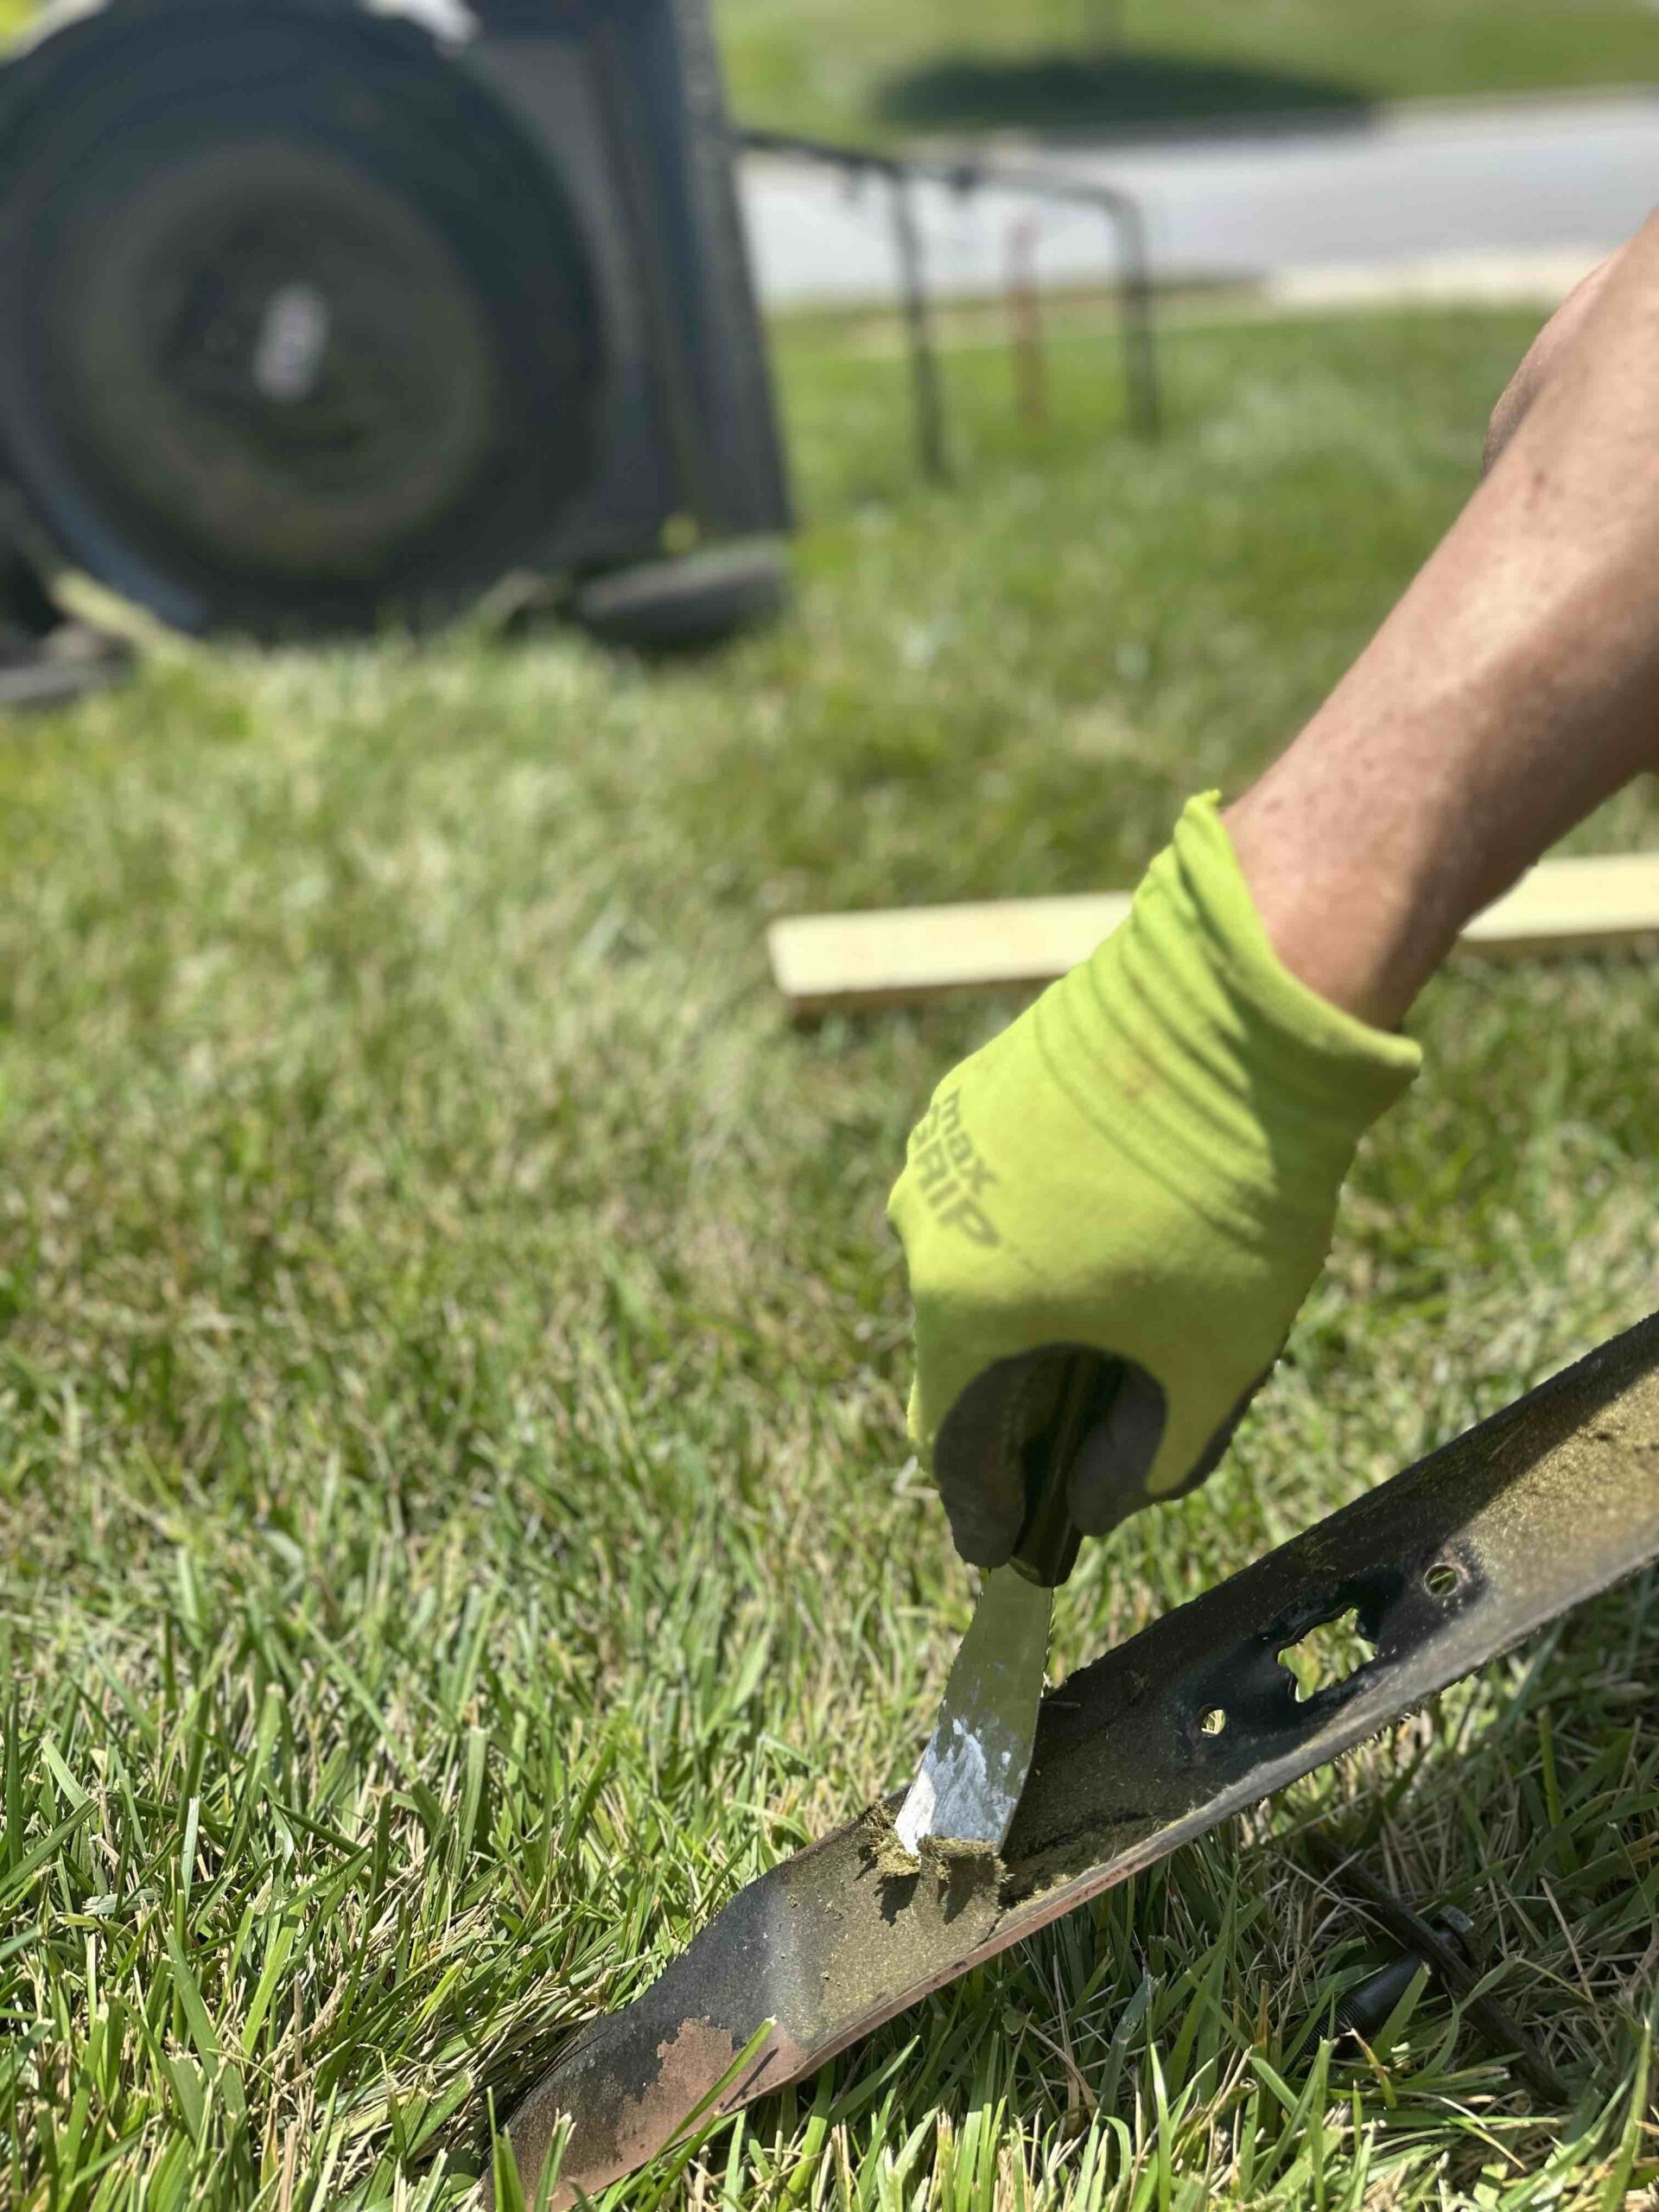 Close up of man's hand's in green gardening gloves sharpening lawn mower blade